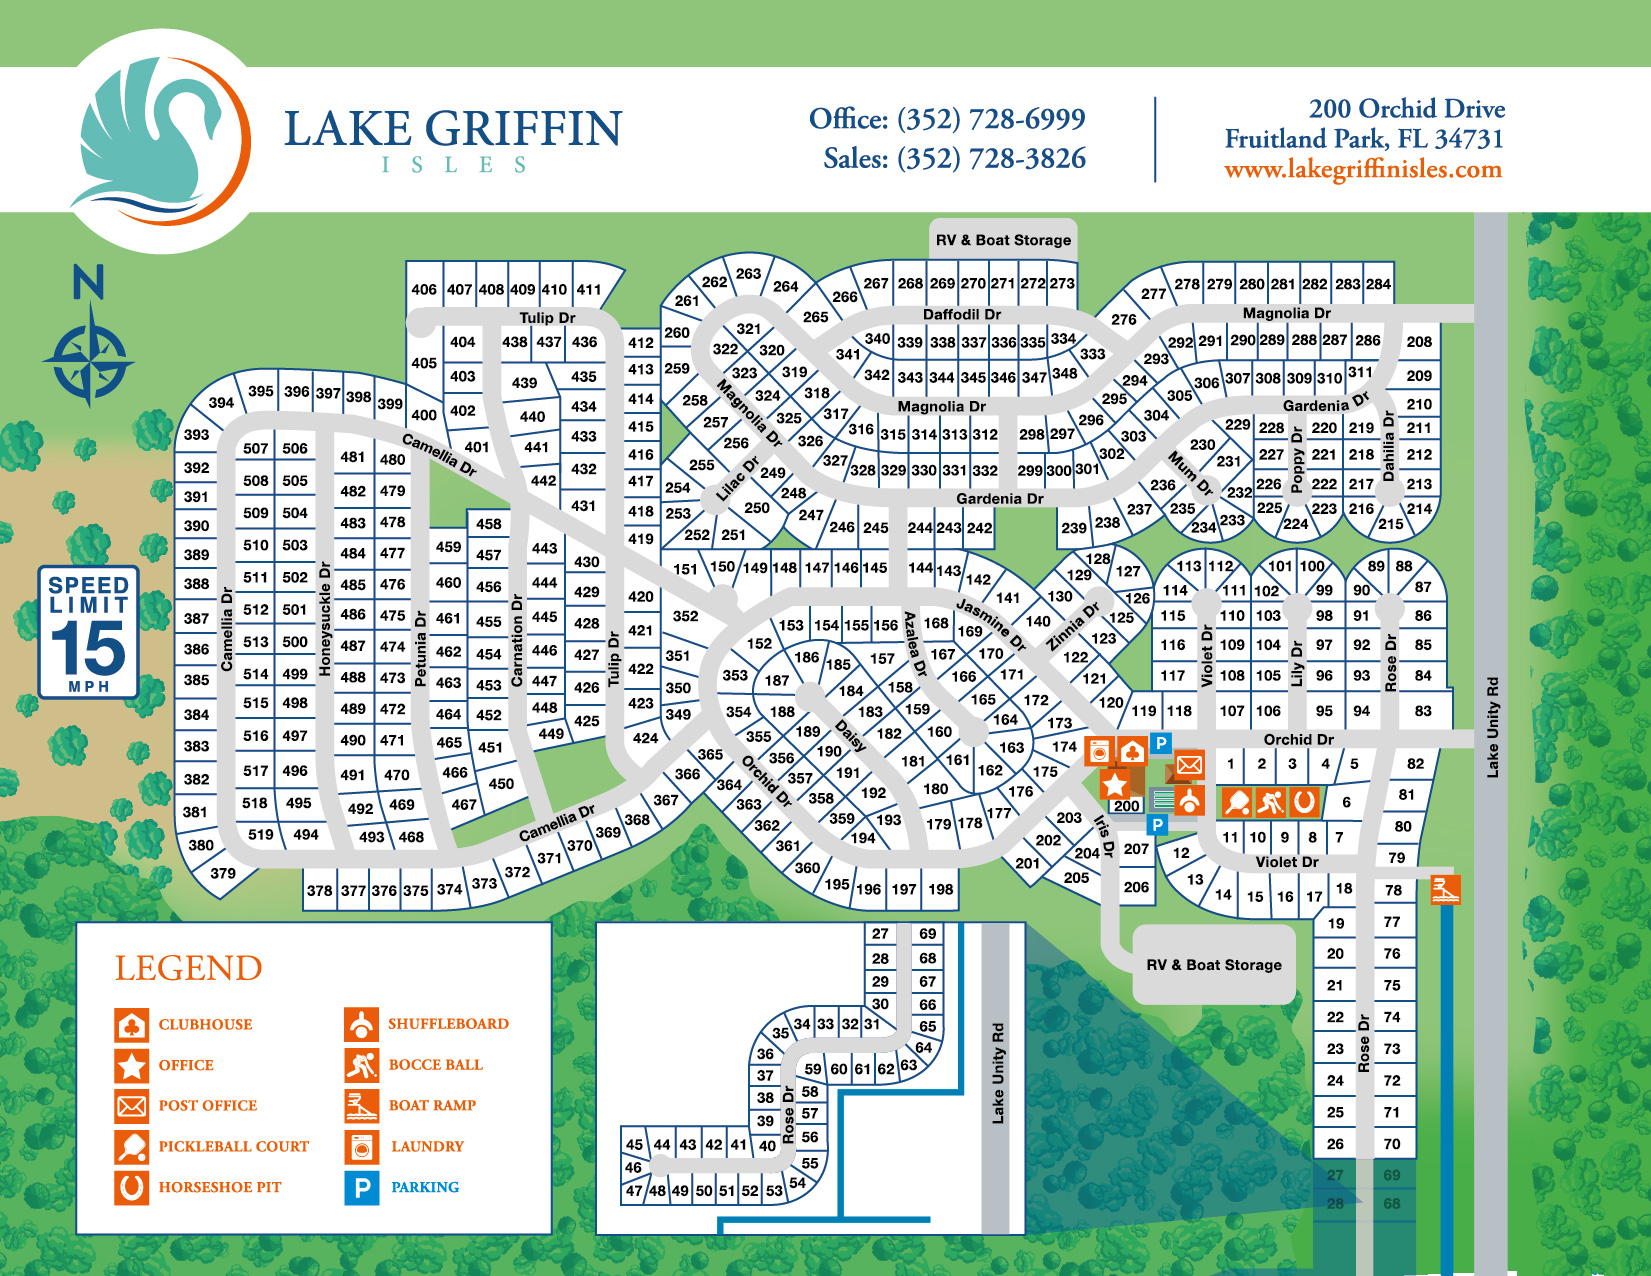 LakeGriffinIsles Park Map